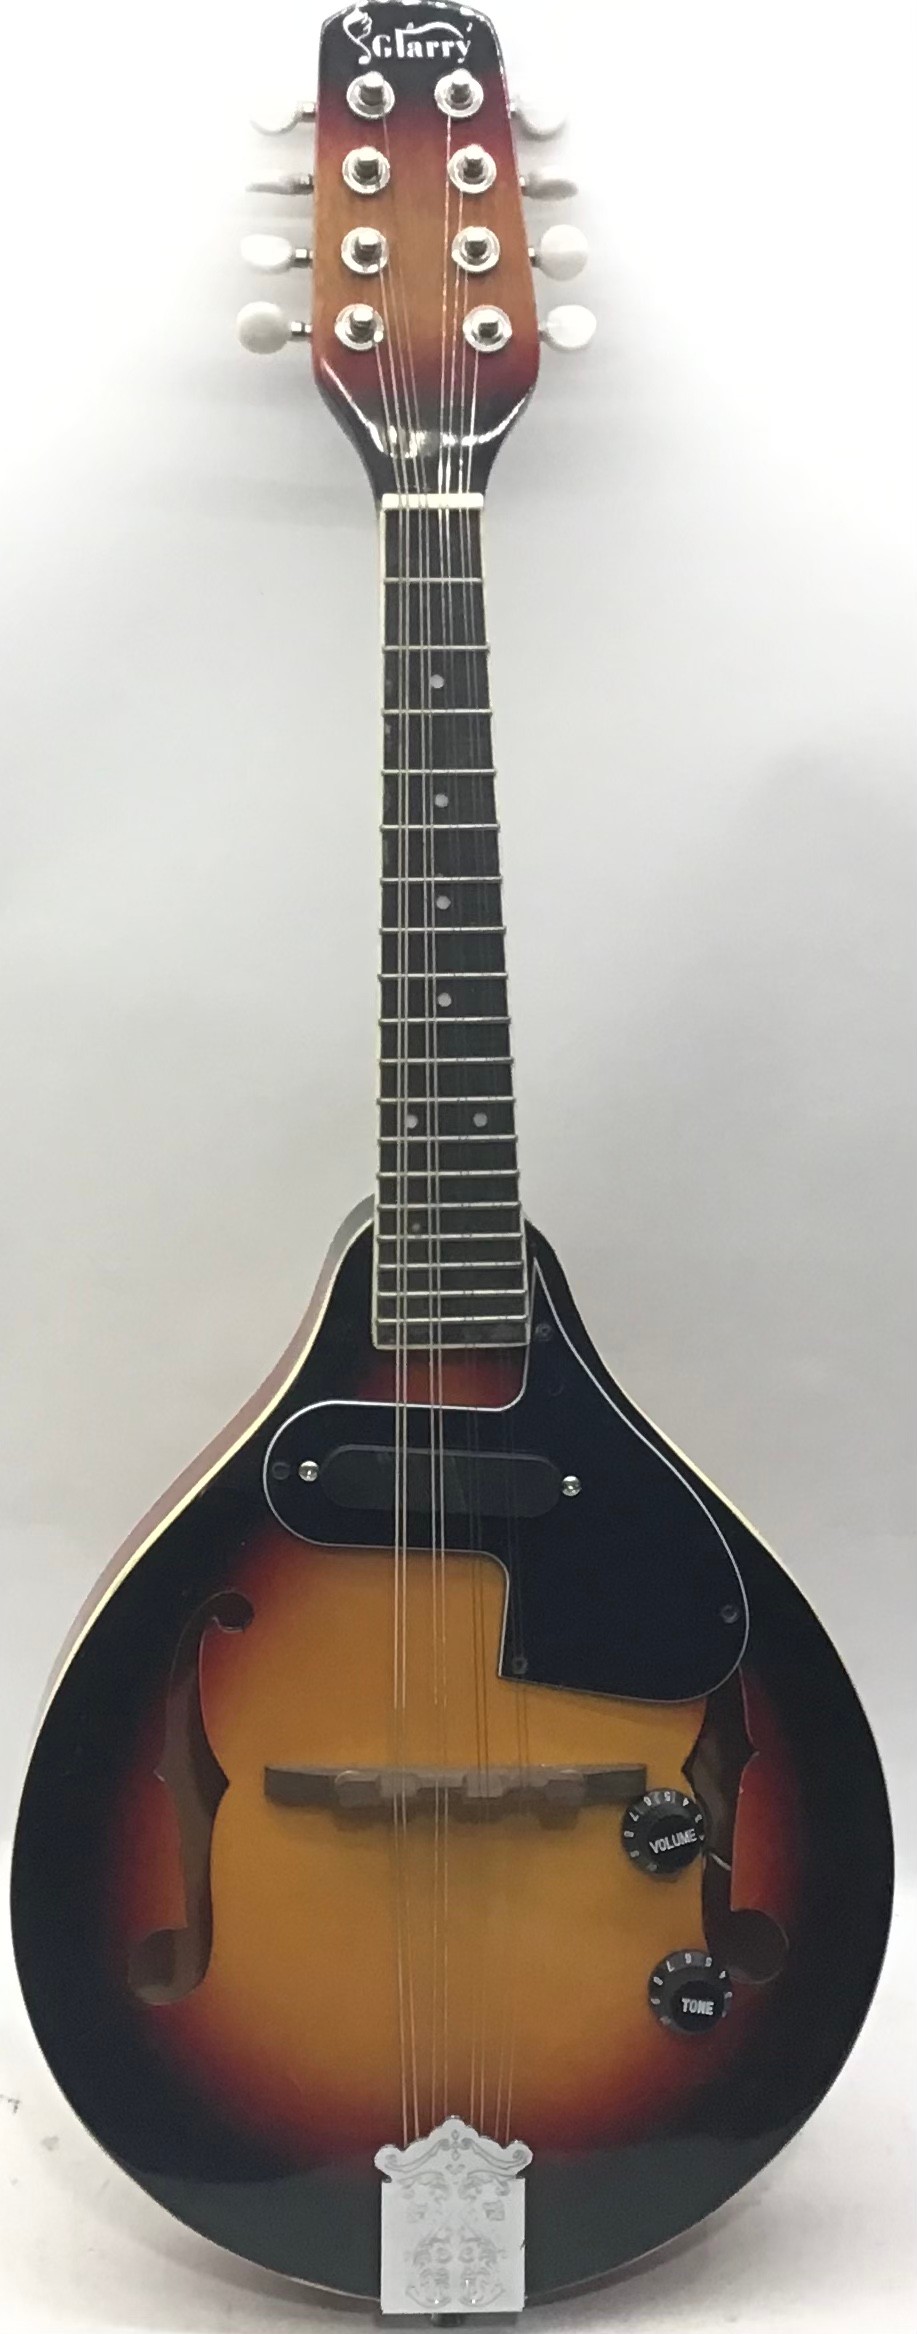 8 STRING MANDOLIN BY GLARRY. This mandolin uses maple body, rosewood bridge, beautiful sound,